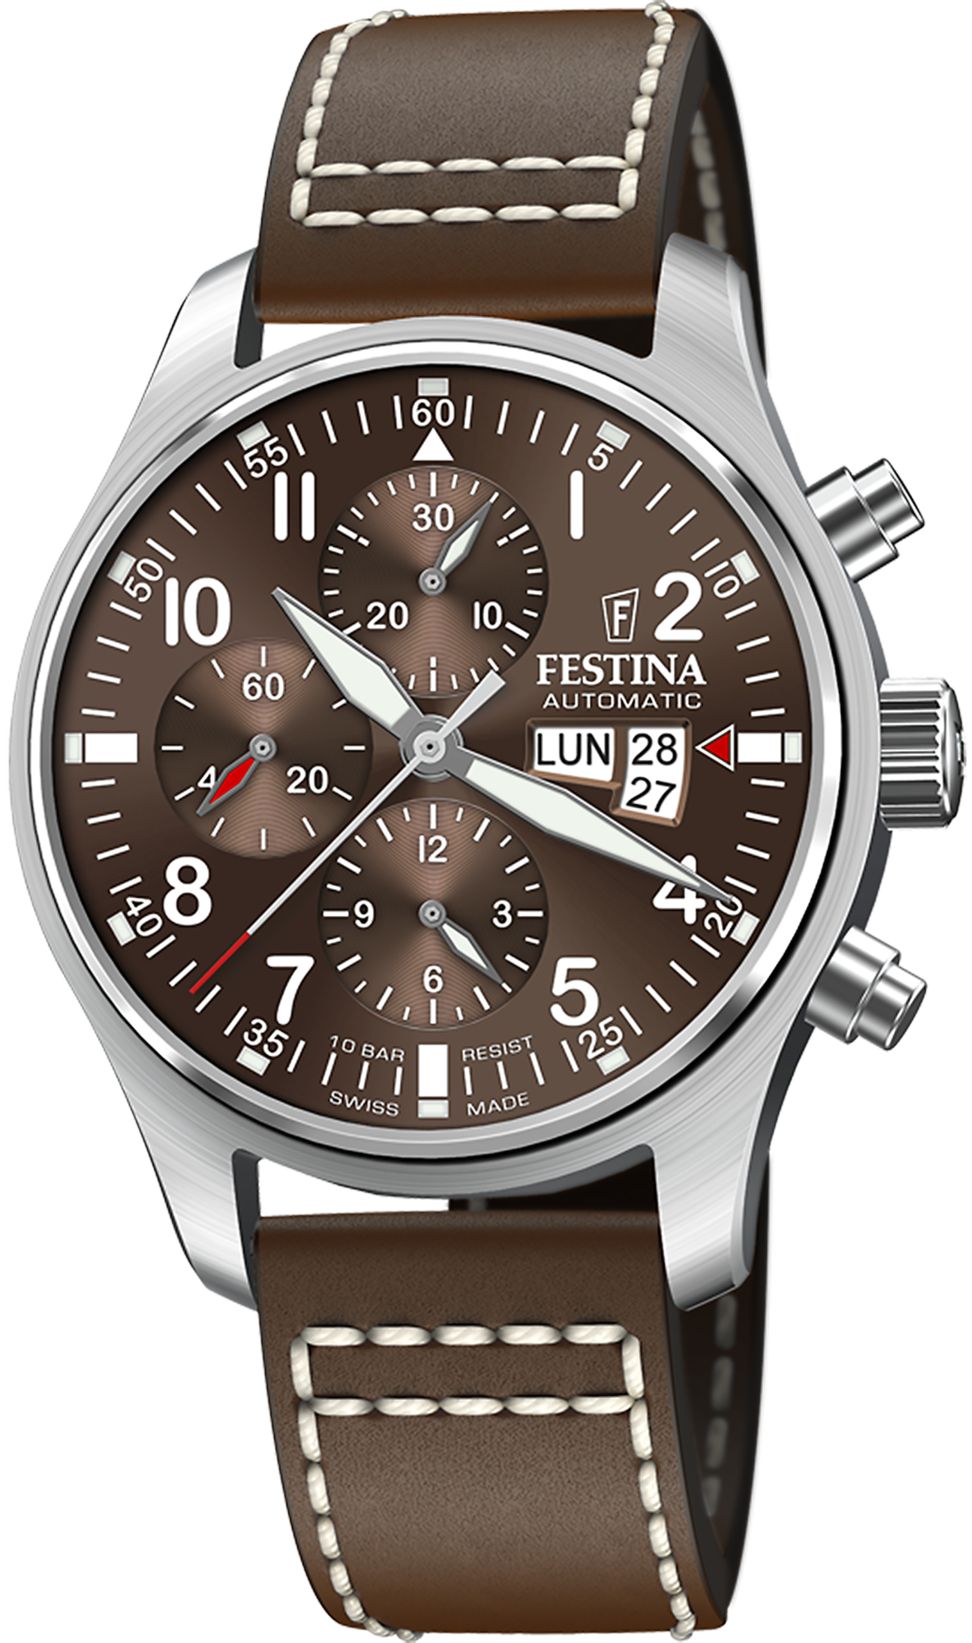 FESTINA Swiss Premium Pilot Watch Series Automatic Chronograph f20150_3 f20150/3